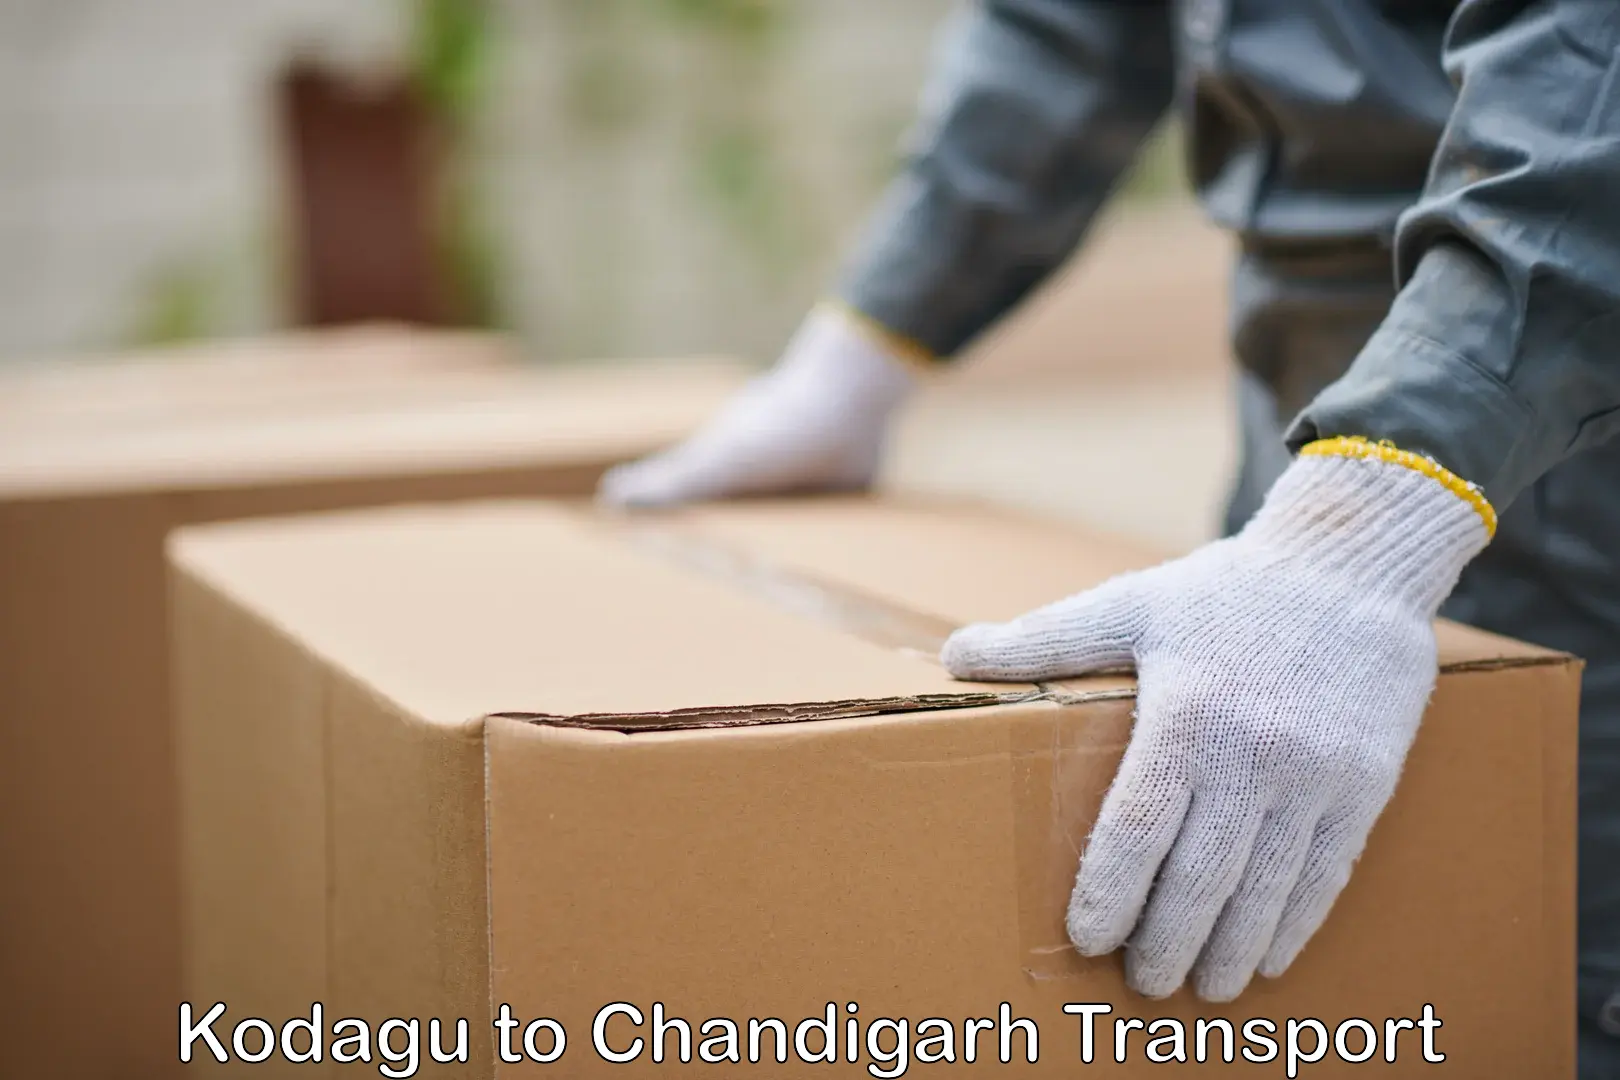 Shipping partner Kodagu to Chandigarh